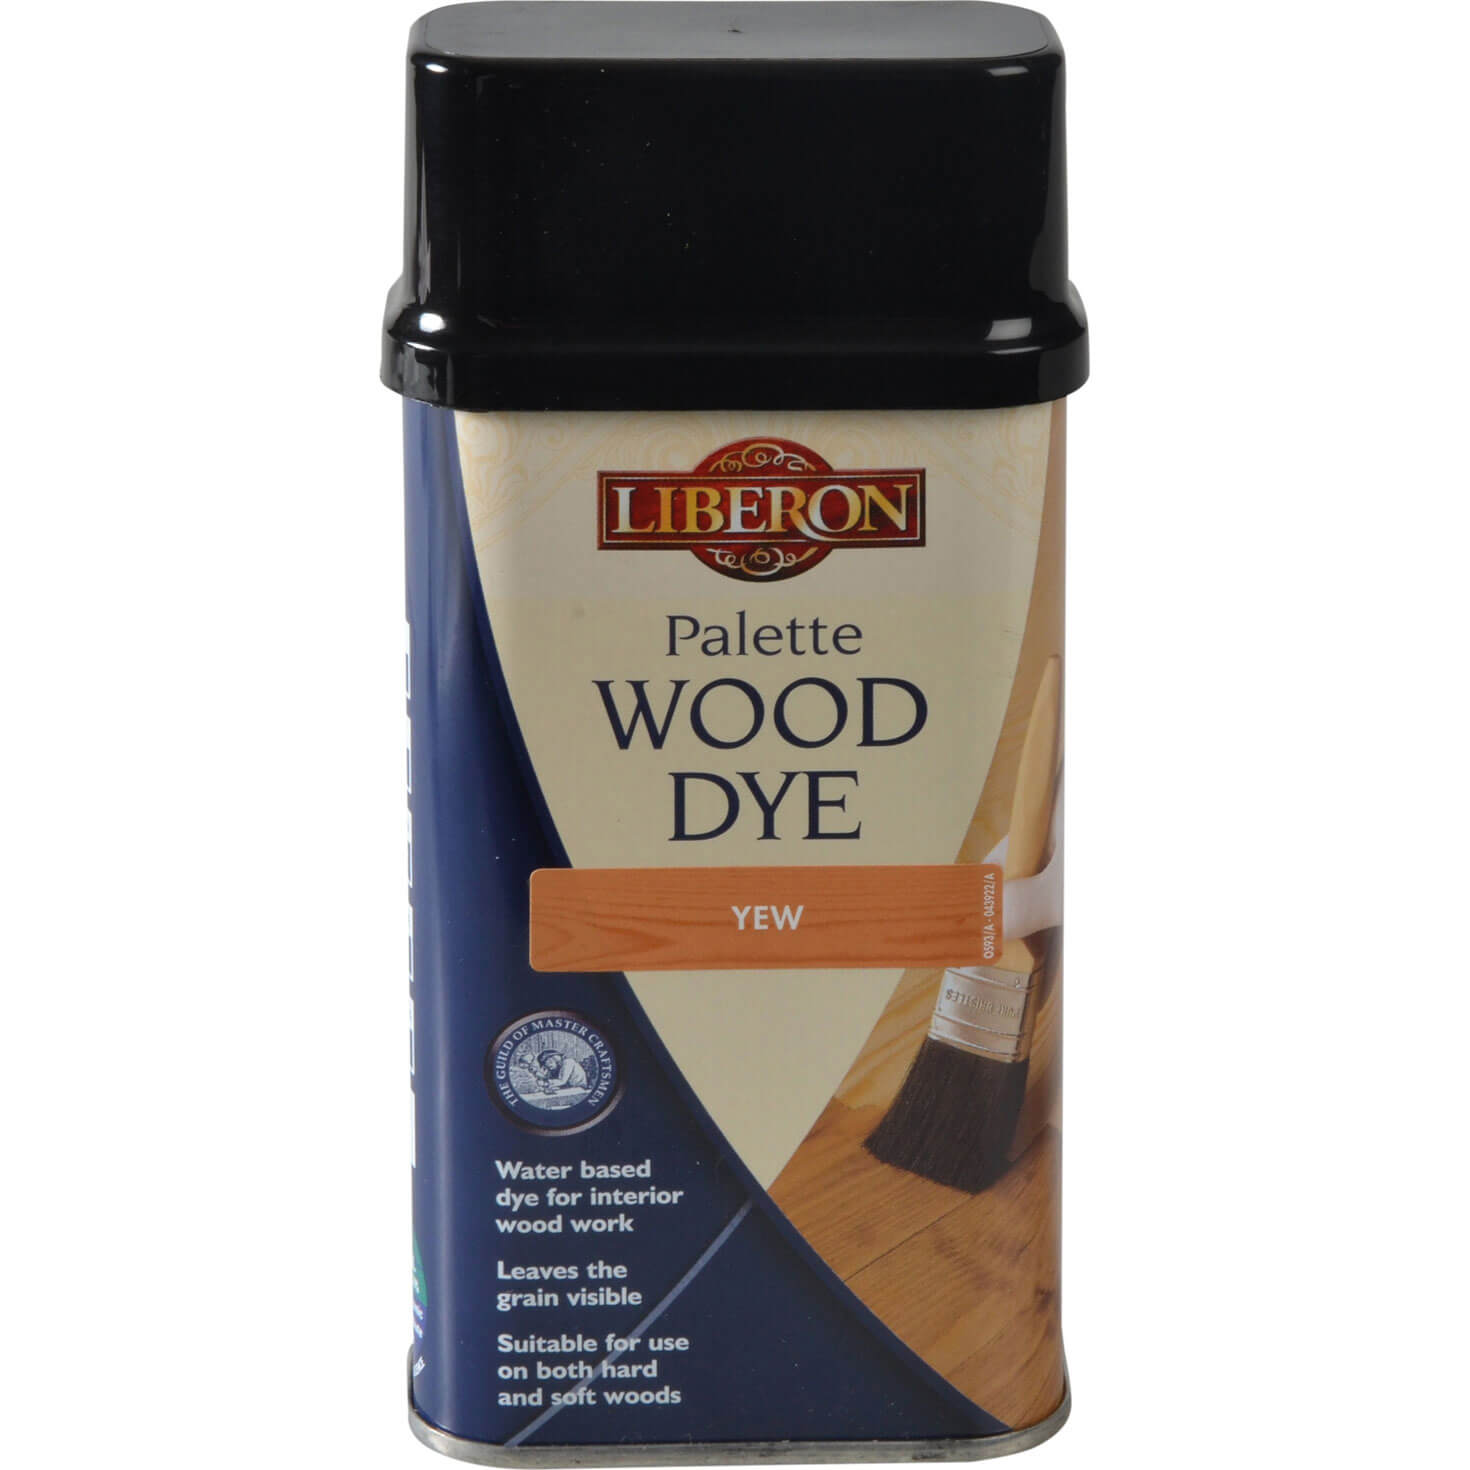 Photos - Varnish Liberon Palette Wood Dye Yew 250ml 